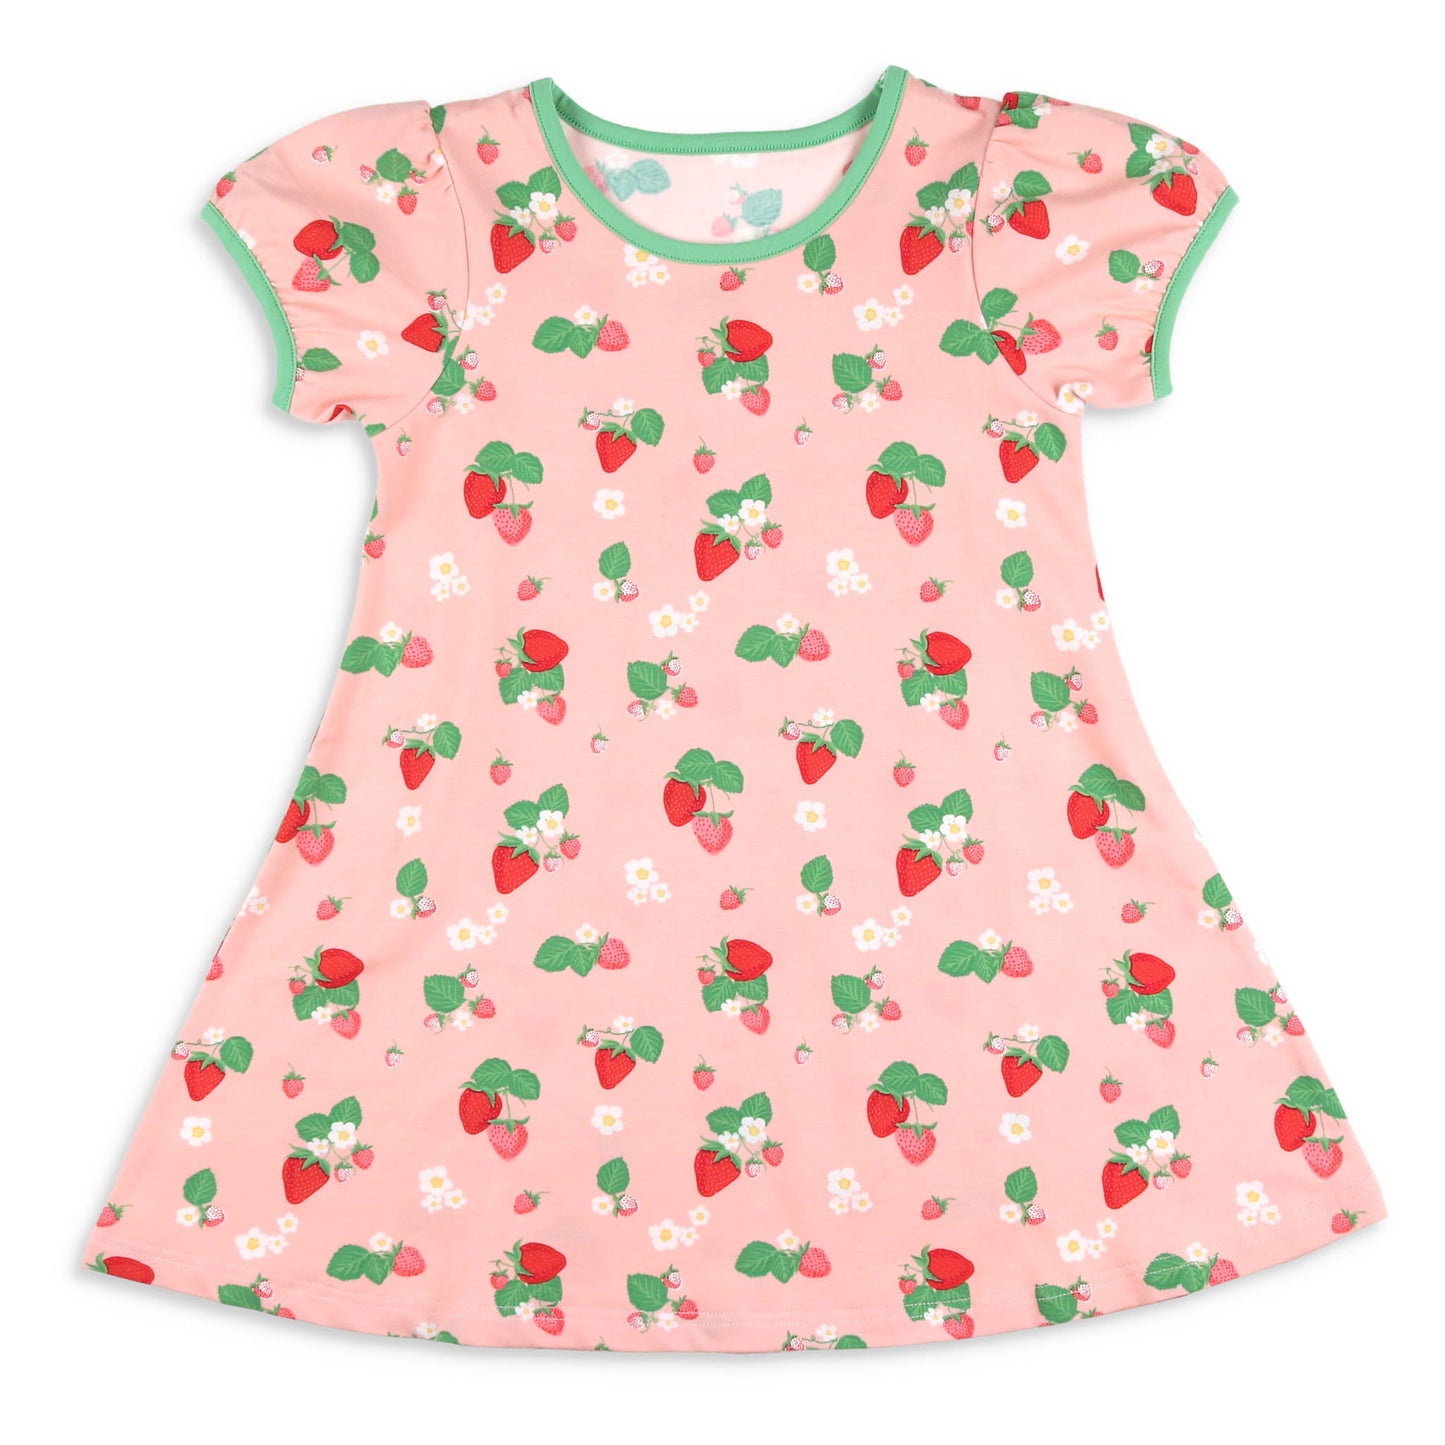 Strawberry Shortcake Play Dress